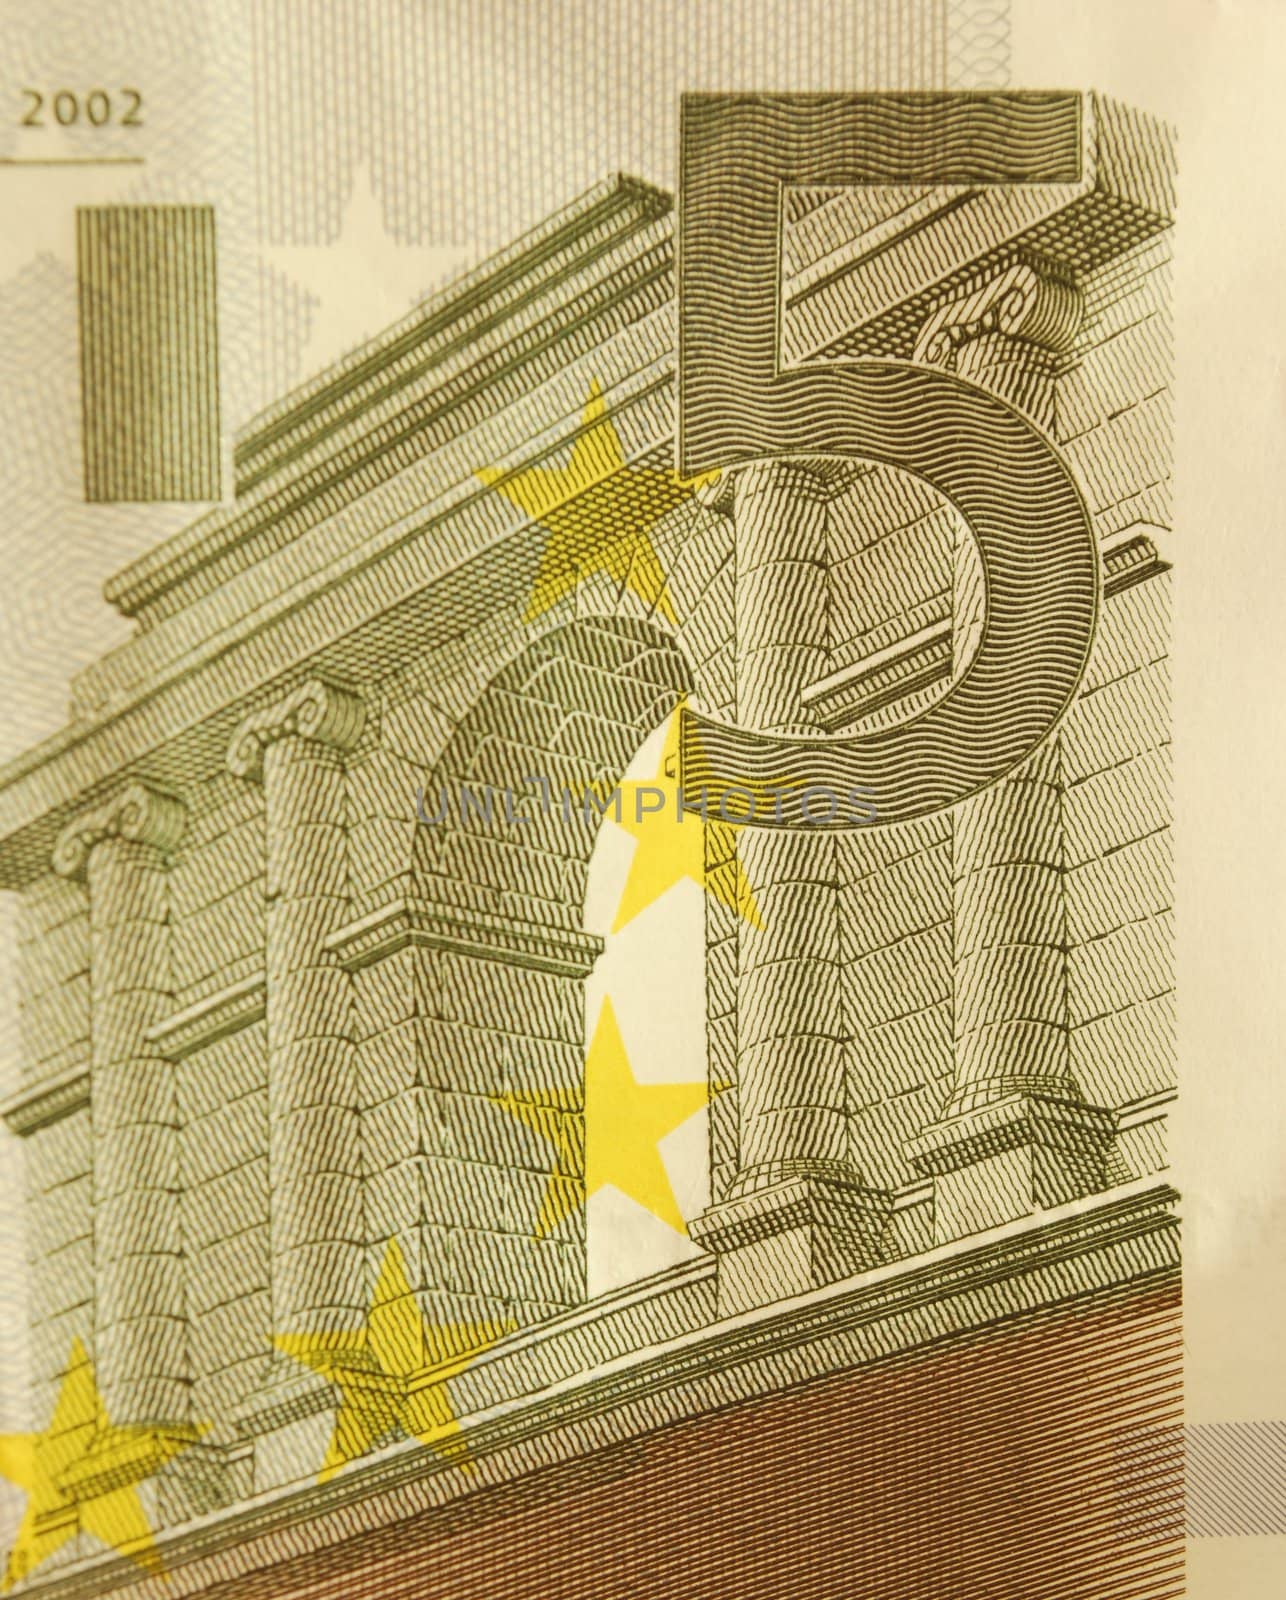 5 Euro bill (close up) by luissantos84